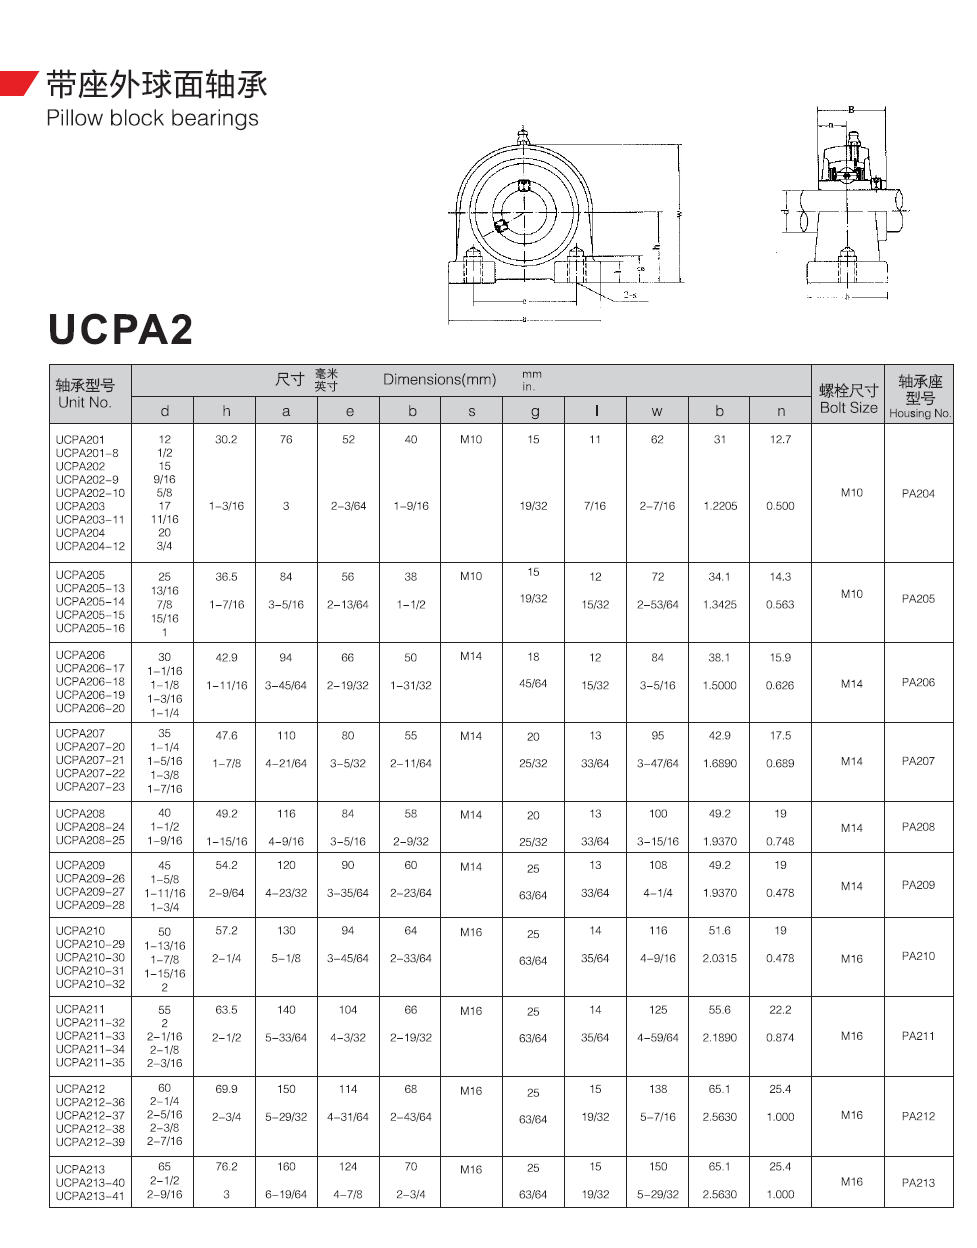 UCPA201	 | 
UCPA201-8	 | 
UCPA202	 | 
UCPA202-9	 | 
UCPA202-10	 | 
UCPA203	 | 
UCPA203-11	 | 
UCPA204	 | 
UCPA204-12	 | 
UCPA205	 | 
UCPA205-13	 | 
UCPA205-14	 | 
UCPA205-15	 | 
UCPA205-16	 | 
UCPA206	 | 
UCPA206-17	 | 
UCPA206-18	 | 
UCPA206-19	 | 
UCPA206-20	 | 
UCPA207	 | 
UCPA207-20	 | 
UCPA207-21	 | 
UCPA207-22	 | 
UCPA207-23	 | 
UCPA208	 | 
UCPA208-24	 | 
UCPA208-25	 | 
UCPA209	 | 
UCPA209-26	 | 
UCPA209-27	 | 
UCPA209-28	 | 
UCPA210	 | 
UCPA210-29	 | 
UCPA210-30	 | 
UCPA210-31	 | 
UCPA210-32	 | 
UCPA211	 | 
UCPA211-32	 | 
UCPA211-33	 | 
UCPA211-34	 | 
UCPA211-35	 | 
UCPA212	 | 
UCPA212-36	 | 
UCPA212-37	 | 
UCPA212-38	 | 
UCPA212-39	 | 
UCPA213	 | 
UCPA213-40	 | 
UCPA213-41	 | 